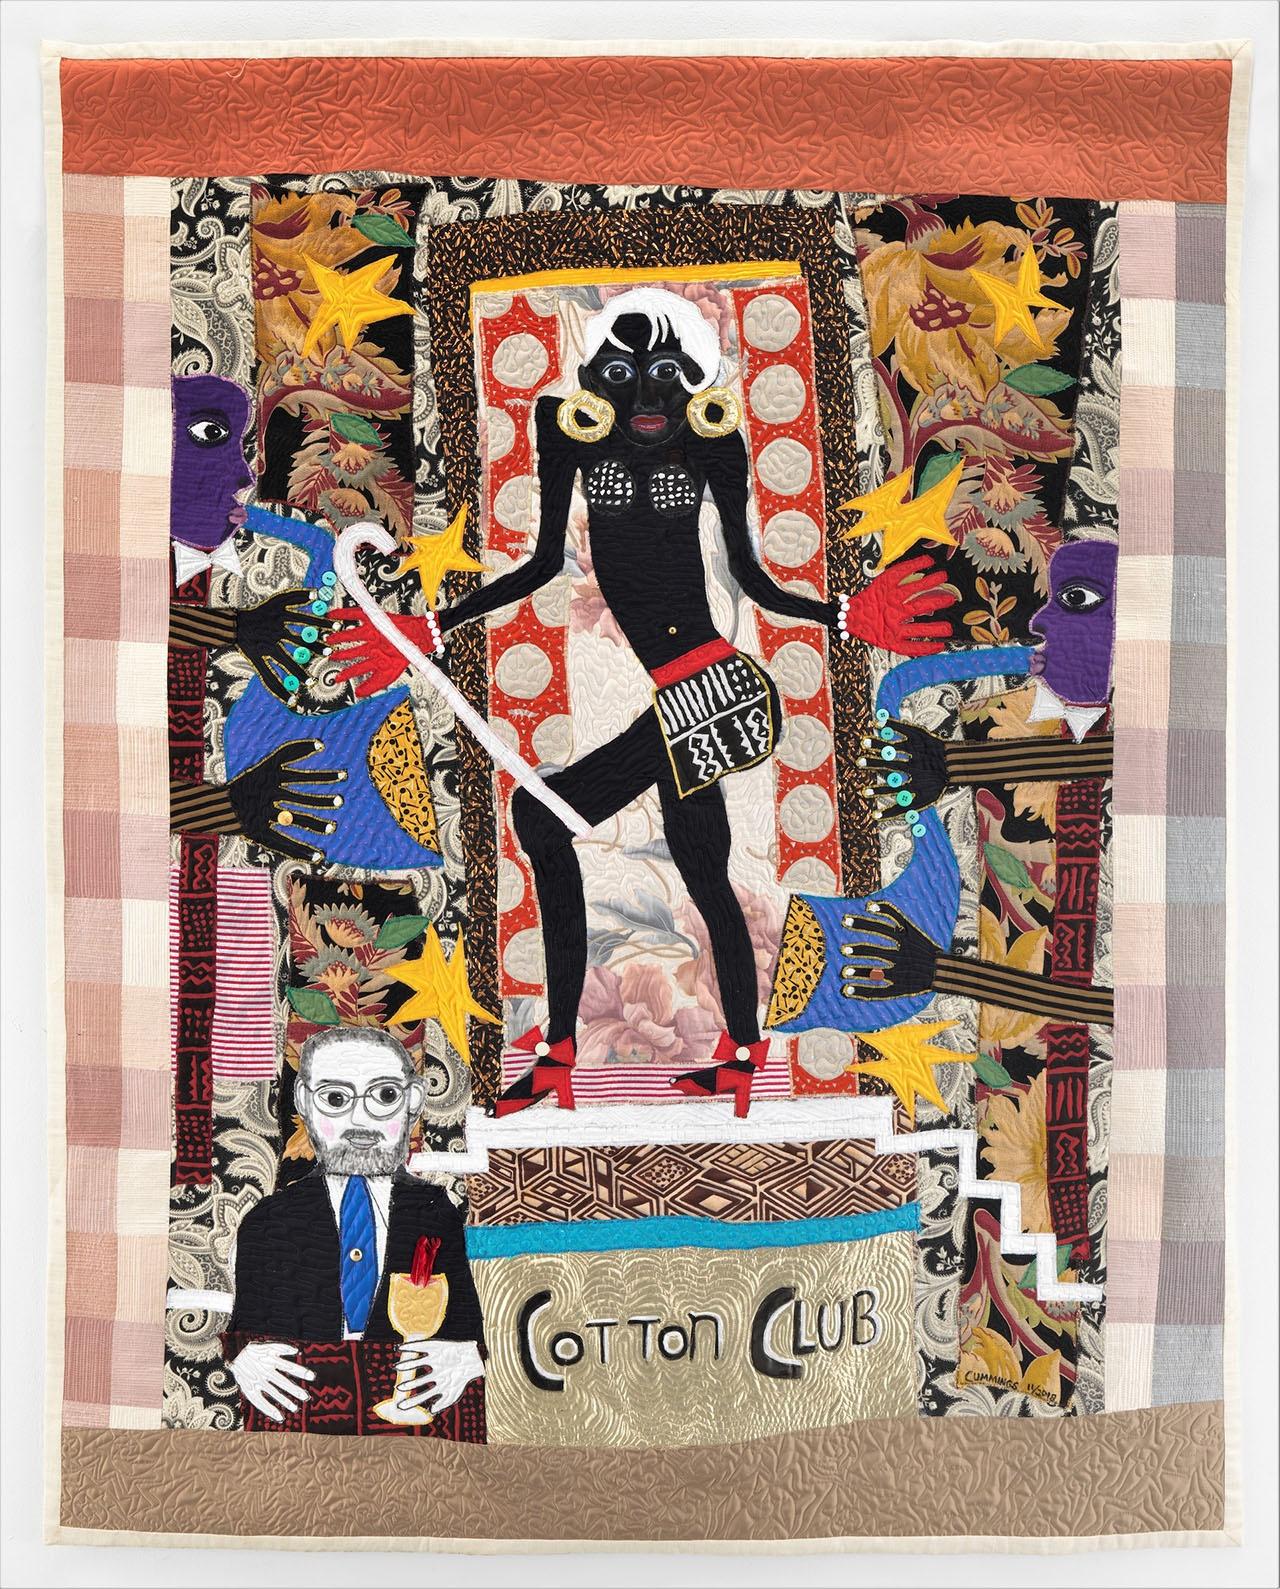 Michael A. Cummings, Cotton Club, Quilts episode, Craft in America